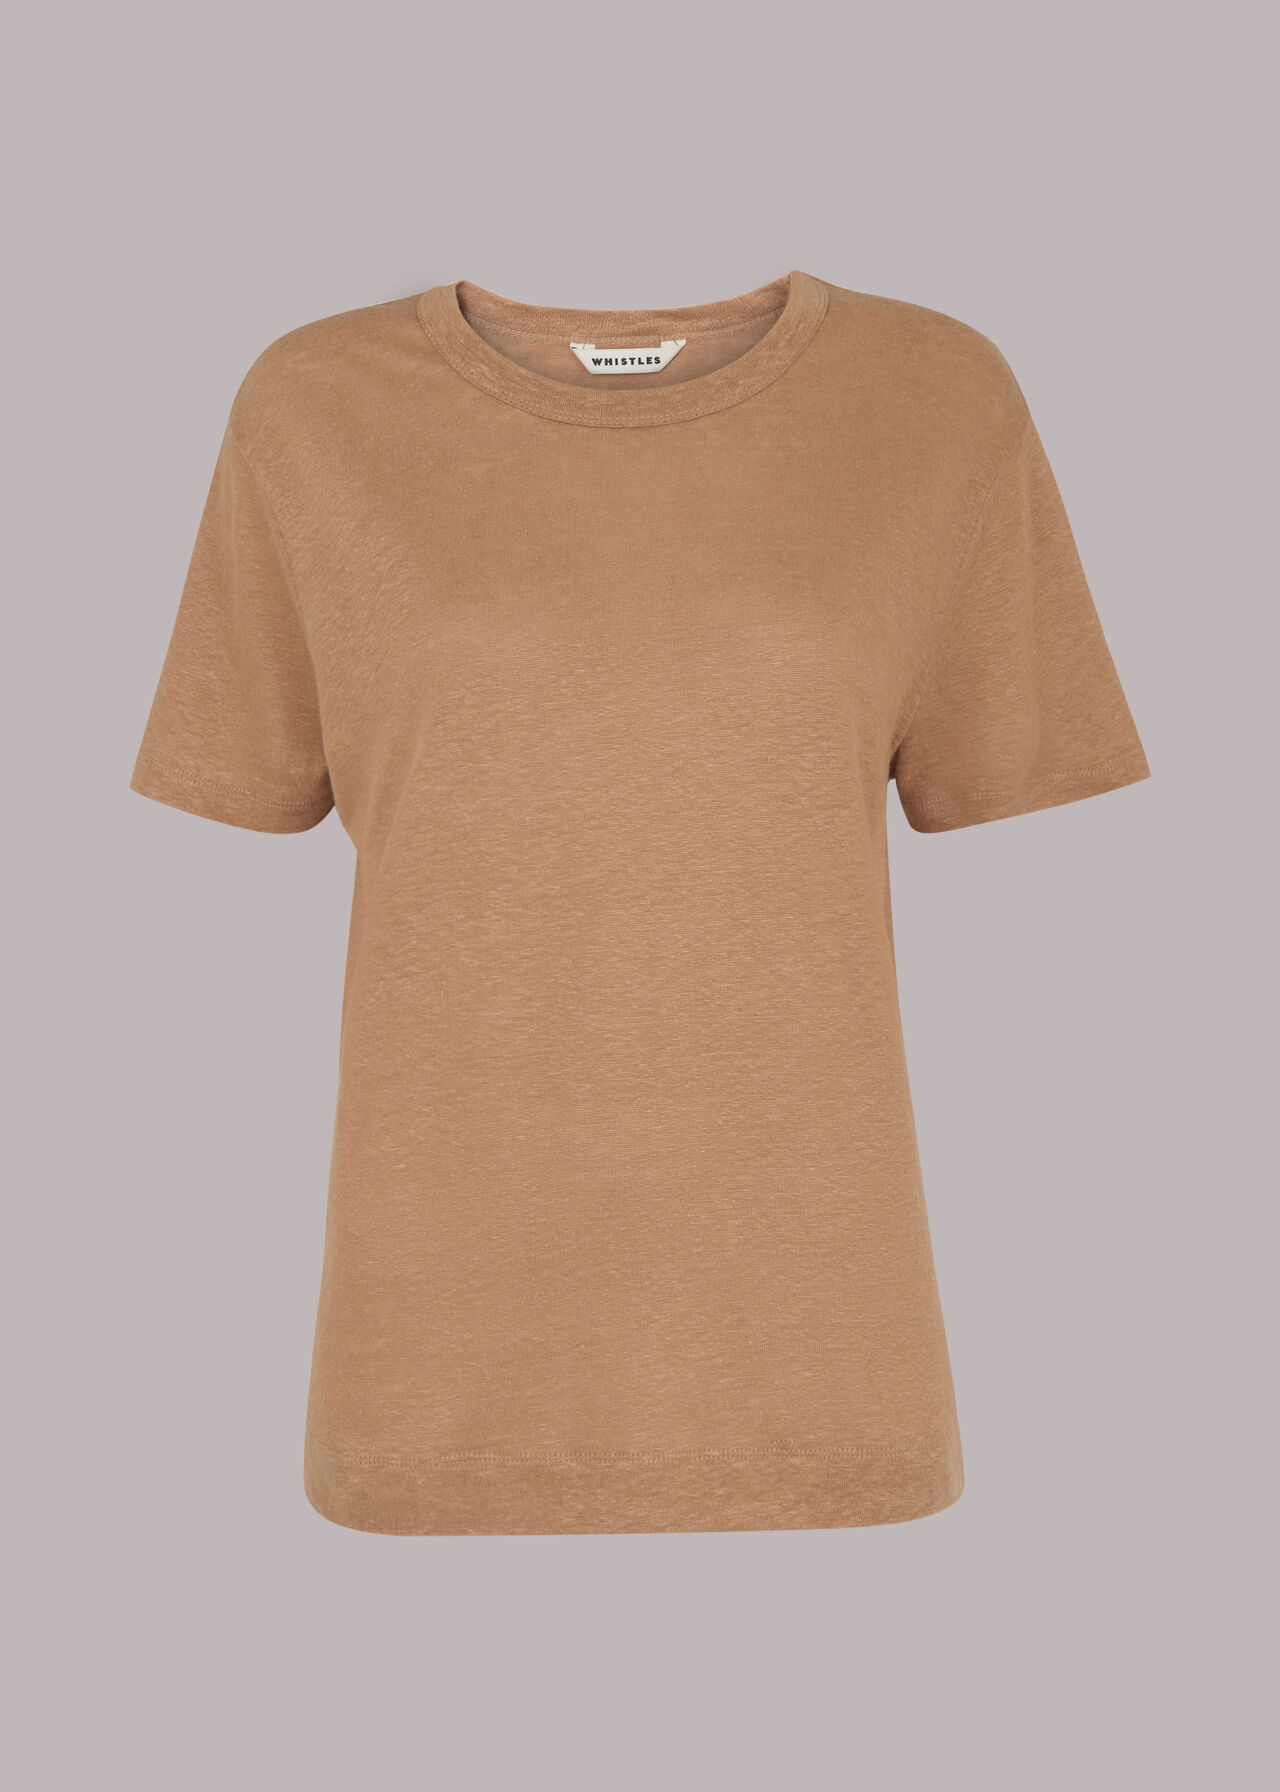 Neutral Ultimate Linen T-Shirt | WHISTLES